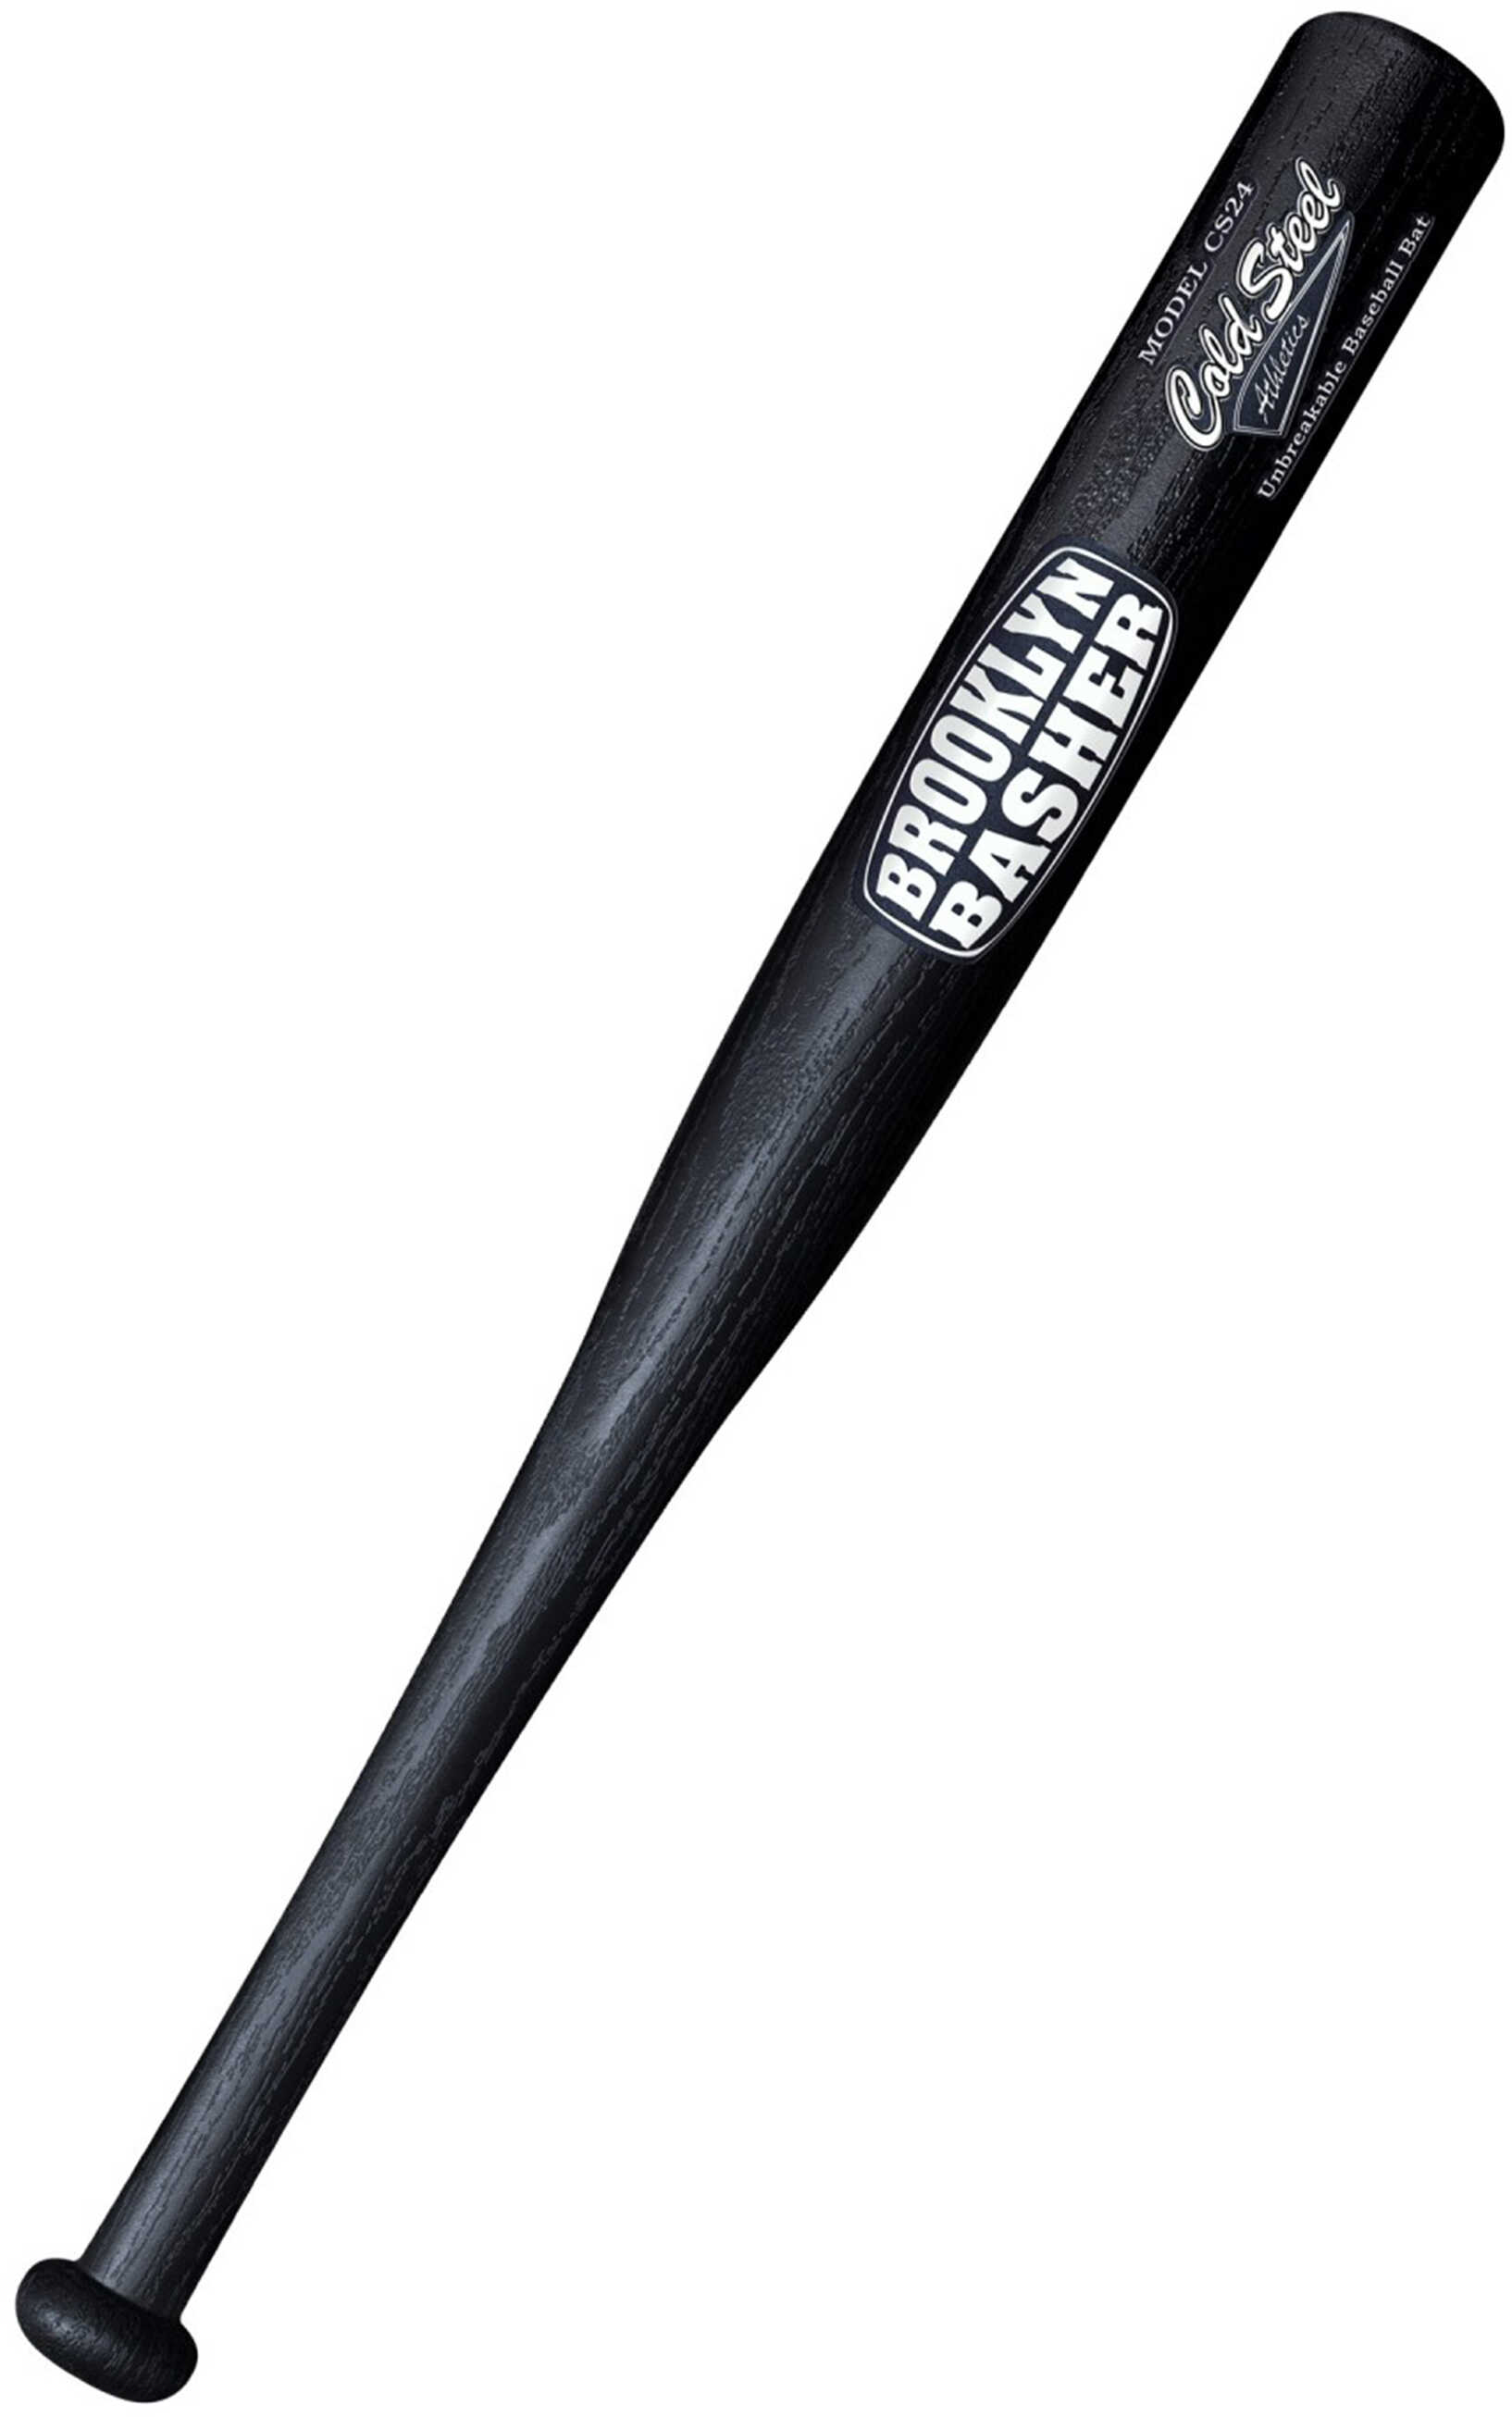 Cold Steel Brooklyn Smasher Tool Black Bat 24" Length Polypropylene CS-92BSB